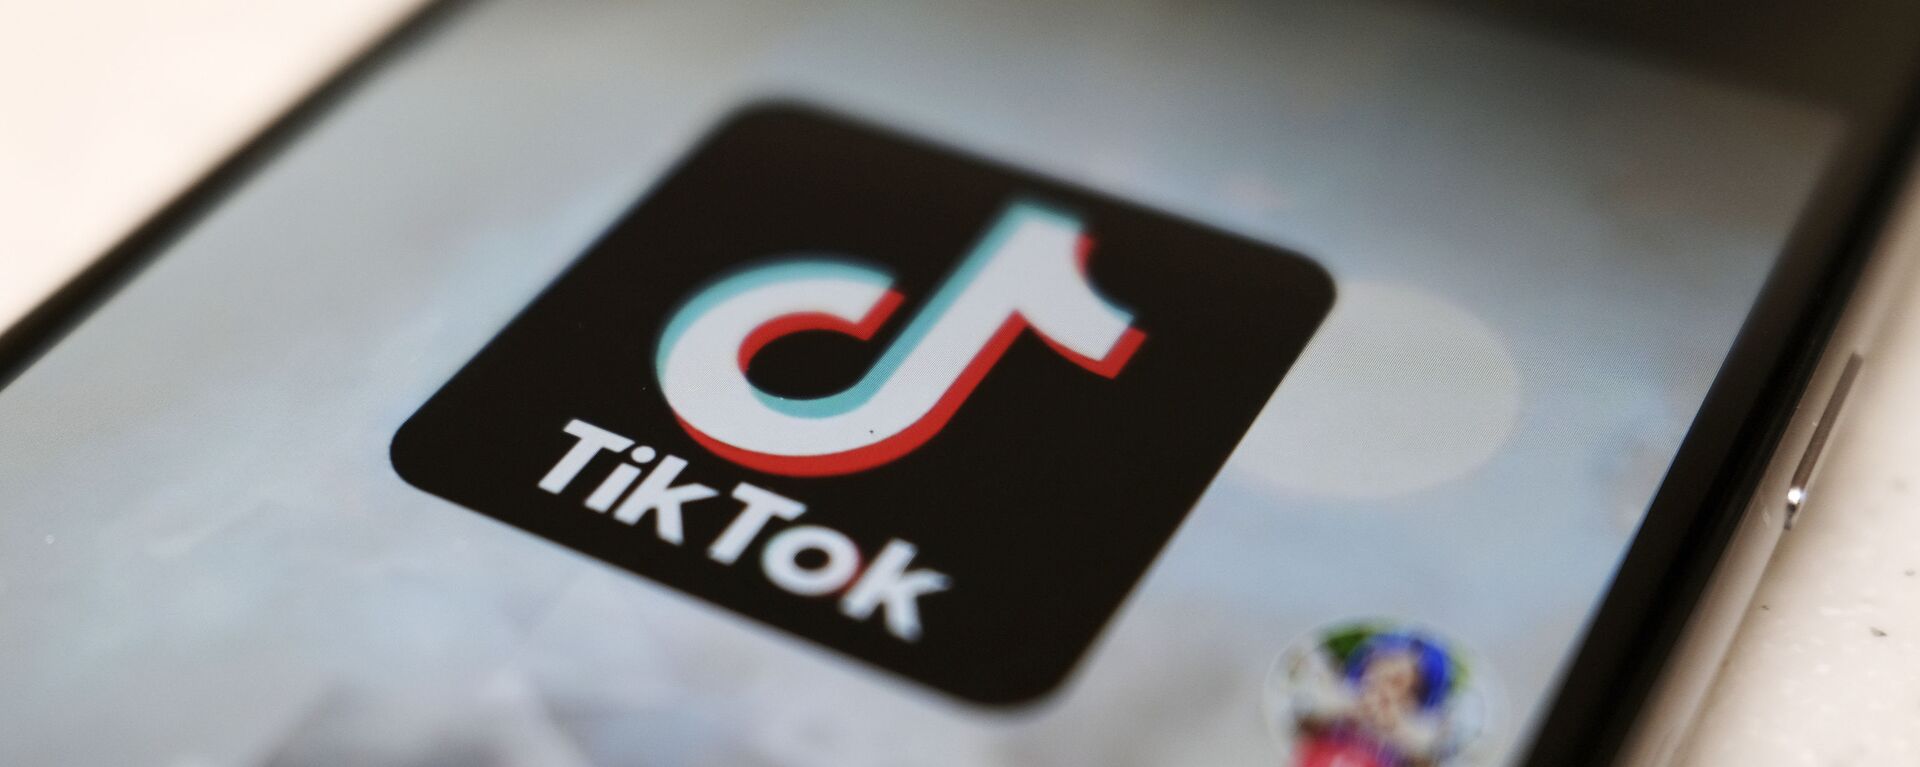 A logo of a smartphone app TikTok is seen on a user post on a smartphone screen Monday, Sept. 28, 2020, in Tokyo - Sputnik International, 1920, 27.12.2022